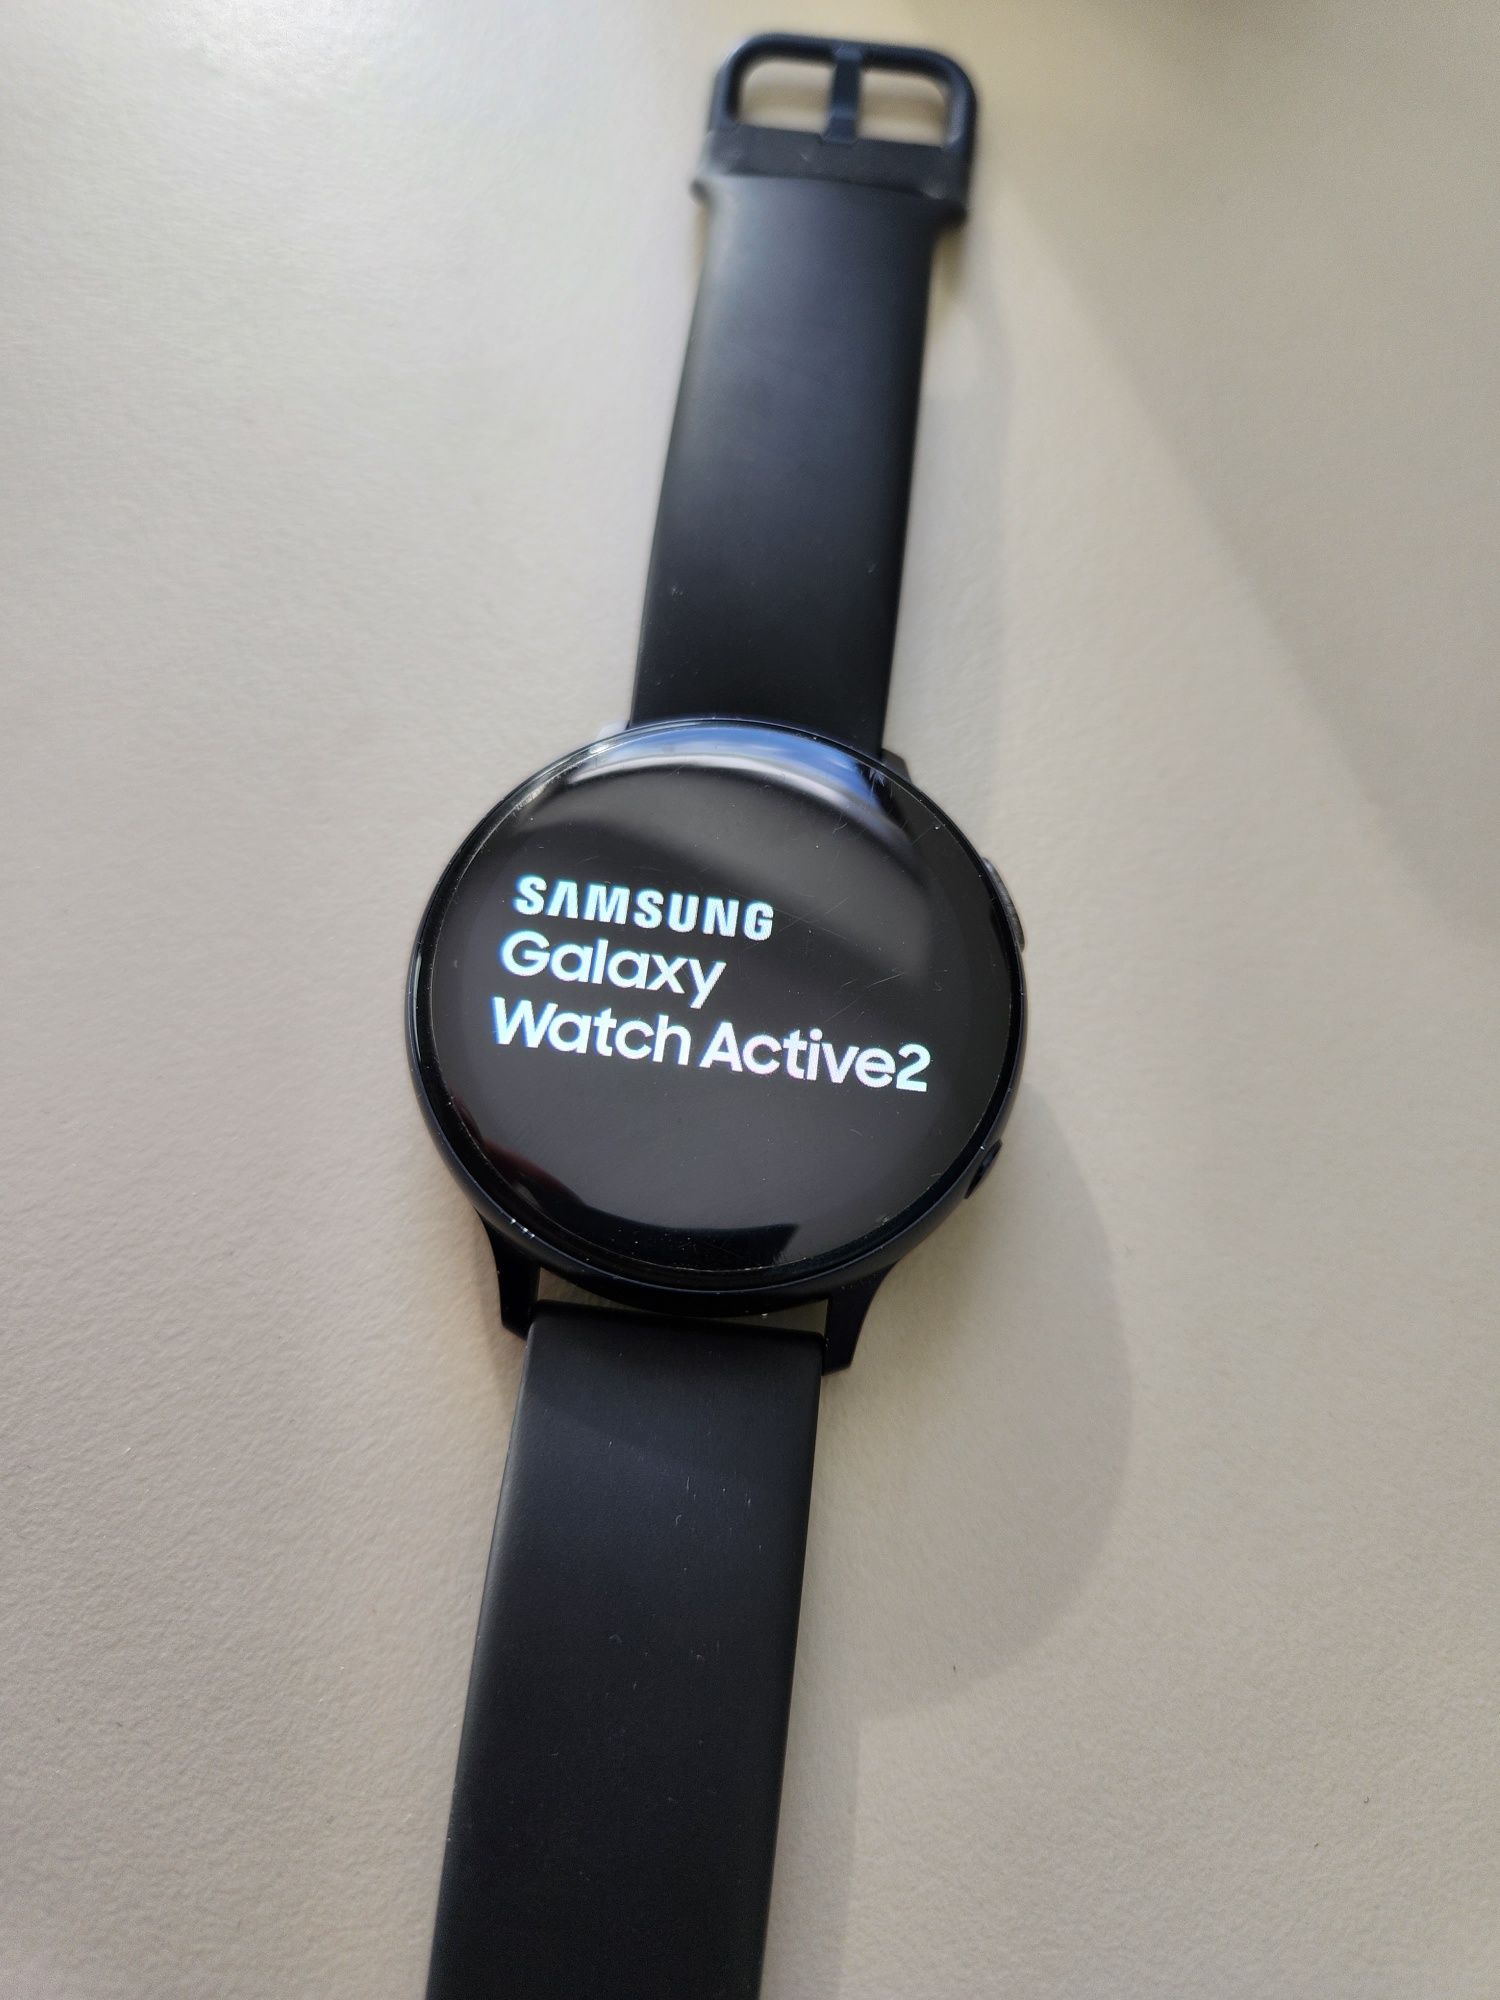 Samsung smart watch galaxy active 2